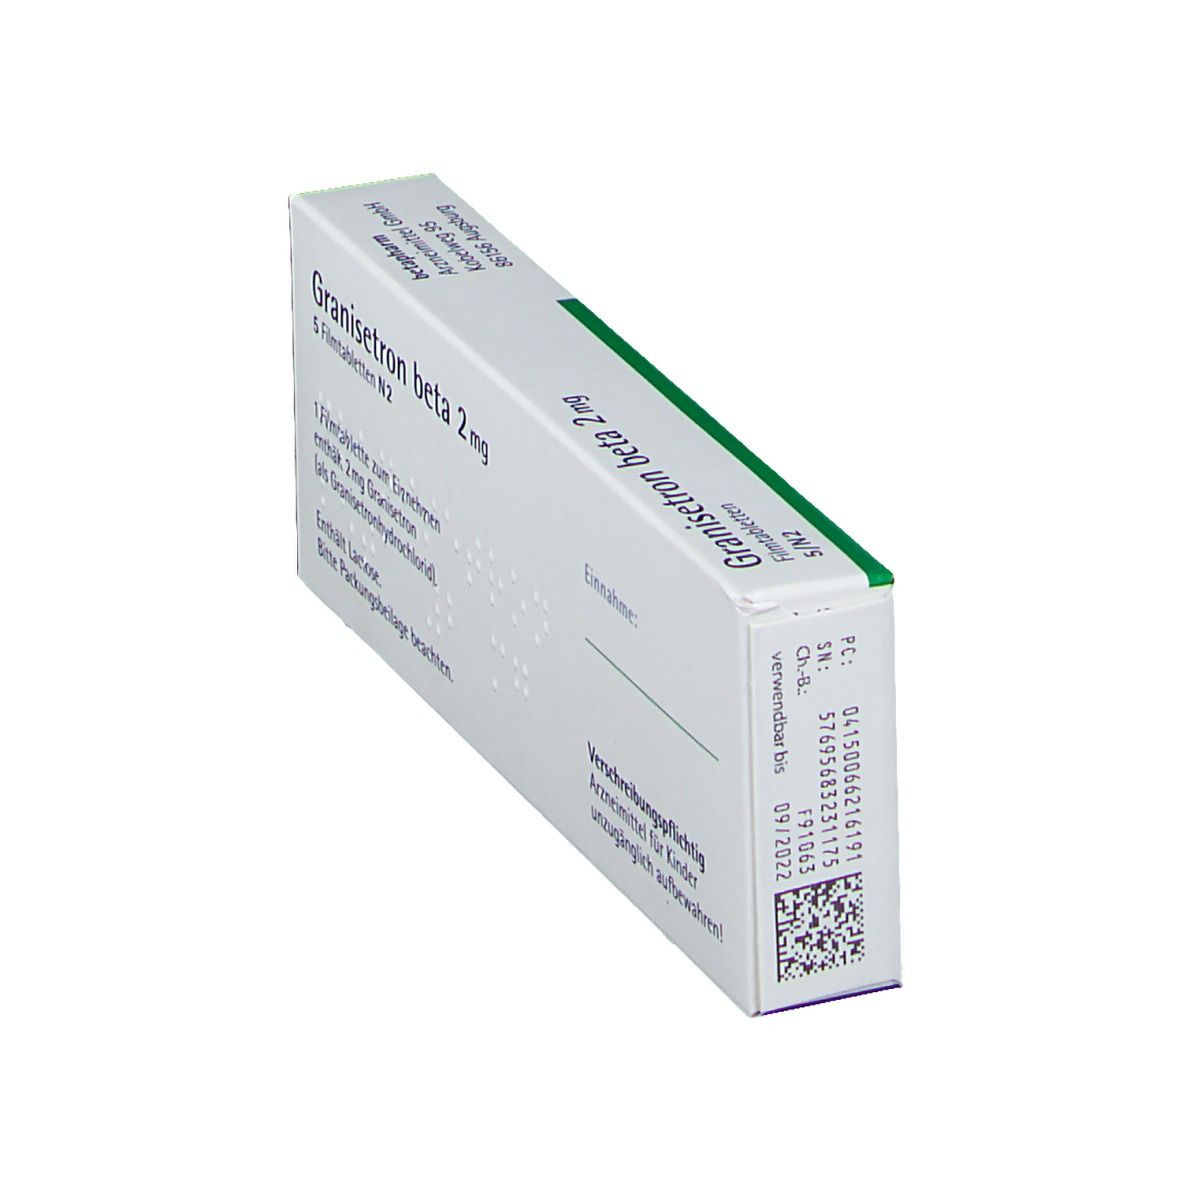 Granisetron beta 2 mg